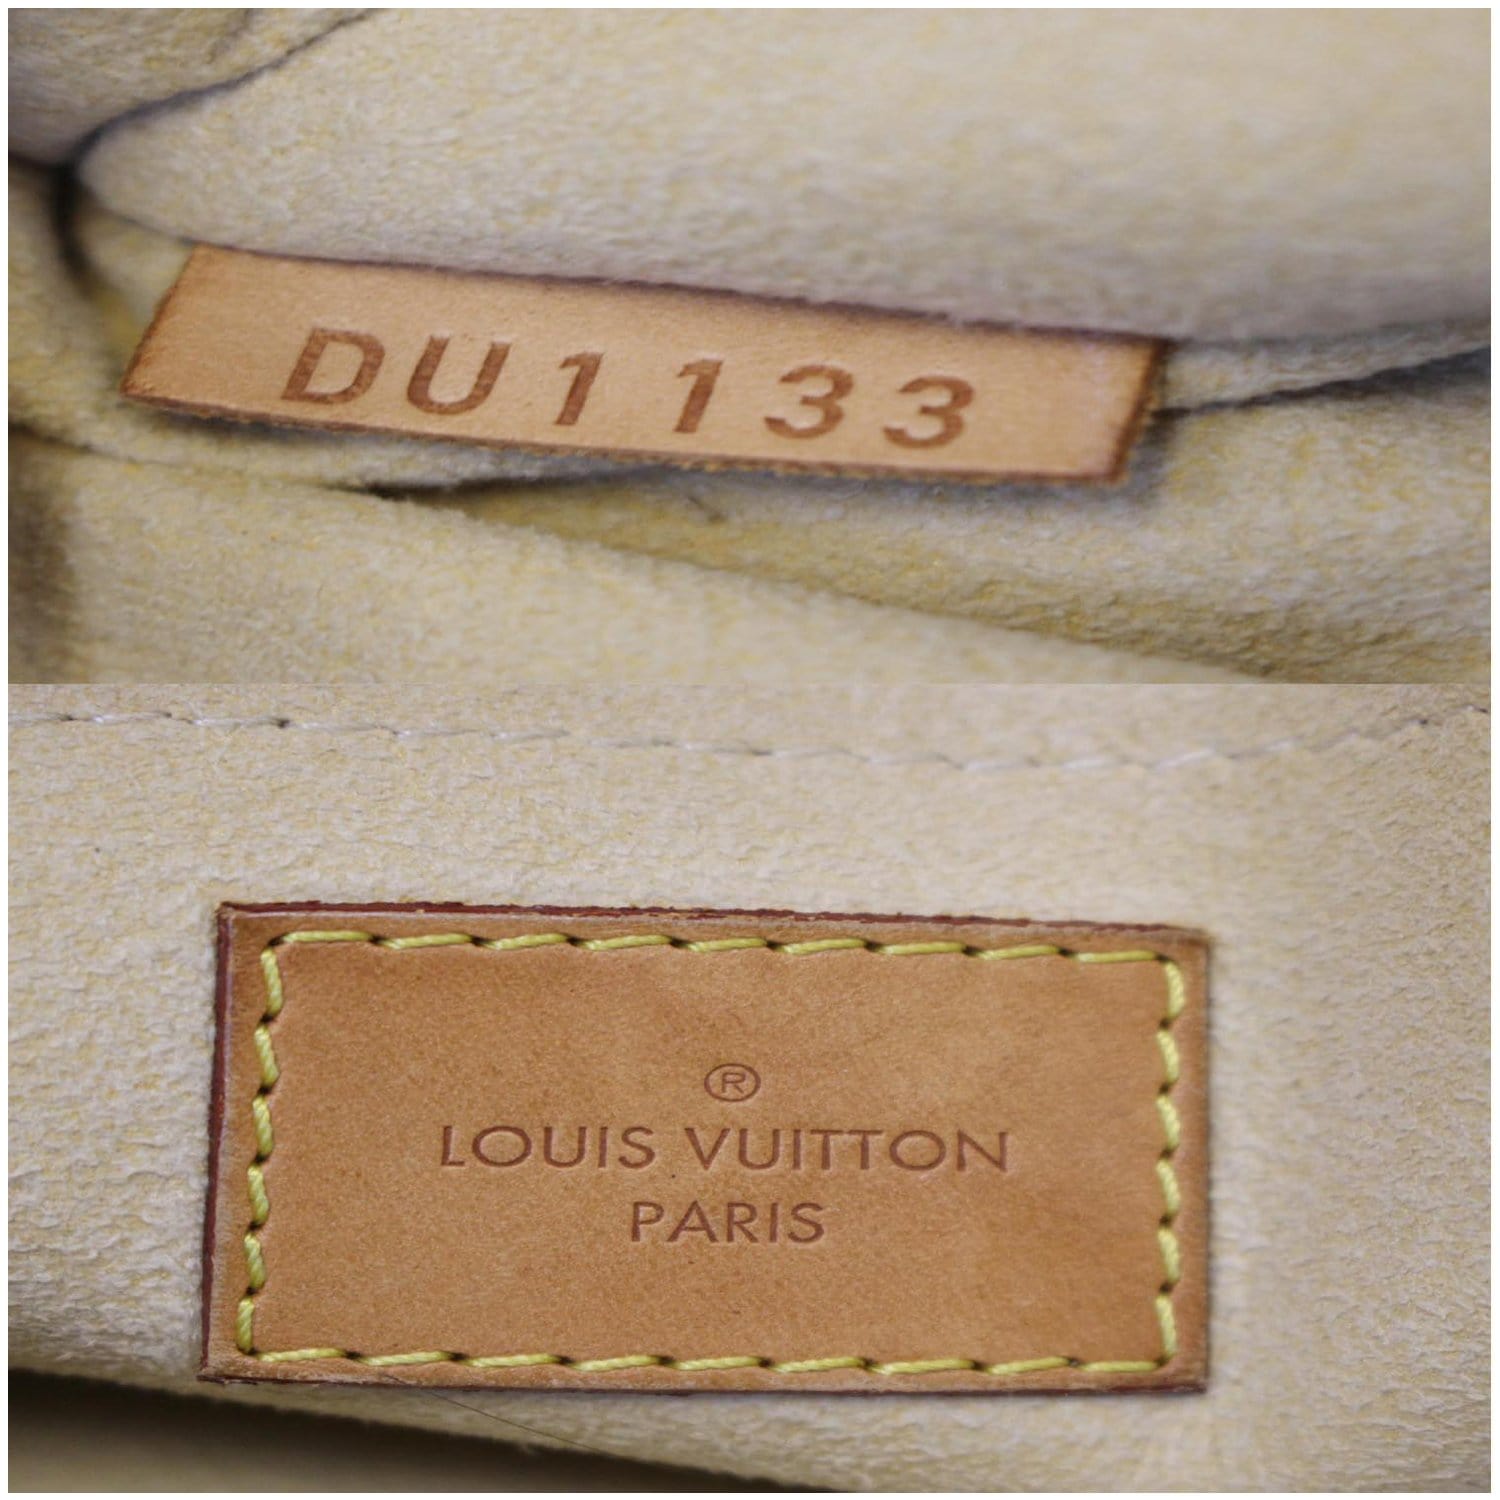 LOUIS VUITTON Salina PM Damier Azur tote bag PVC leather white at